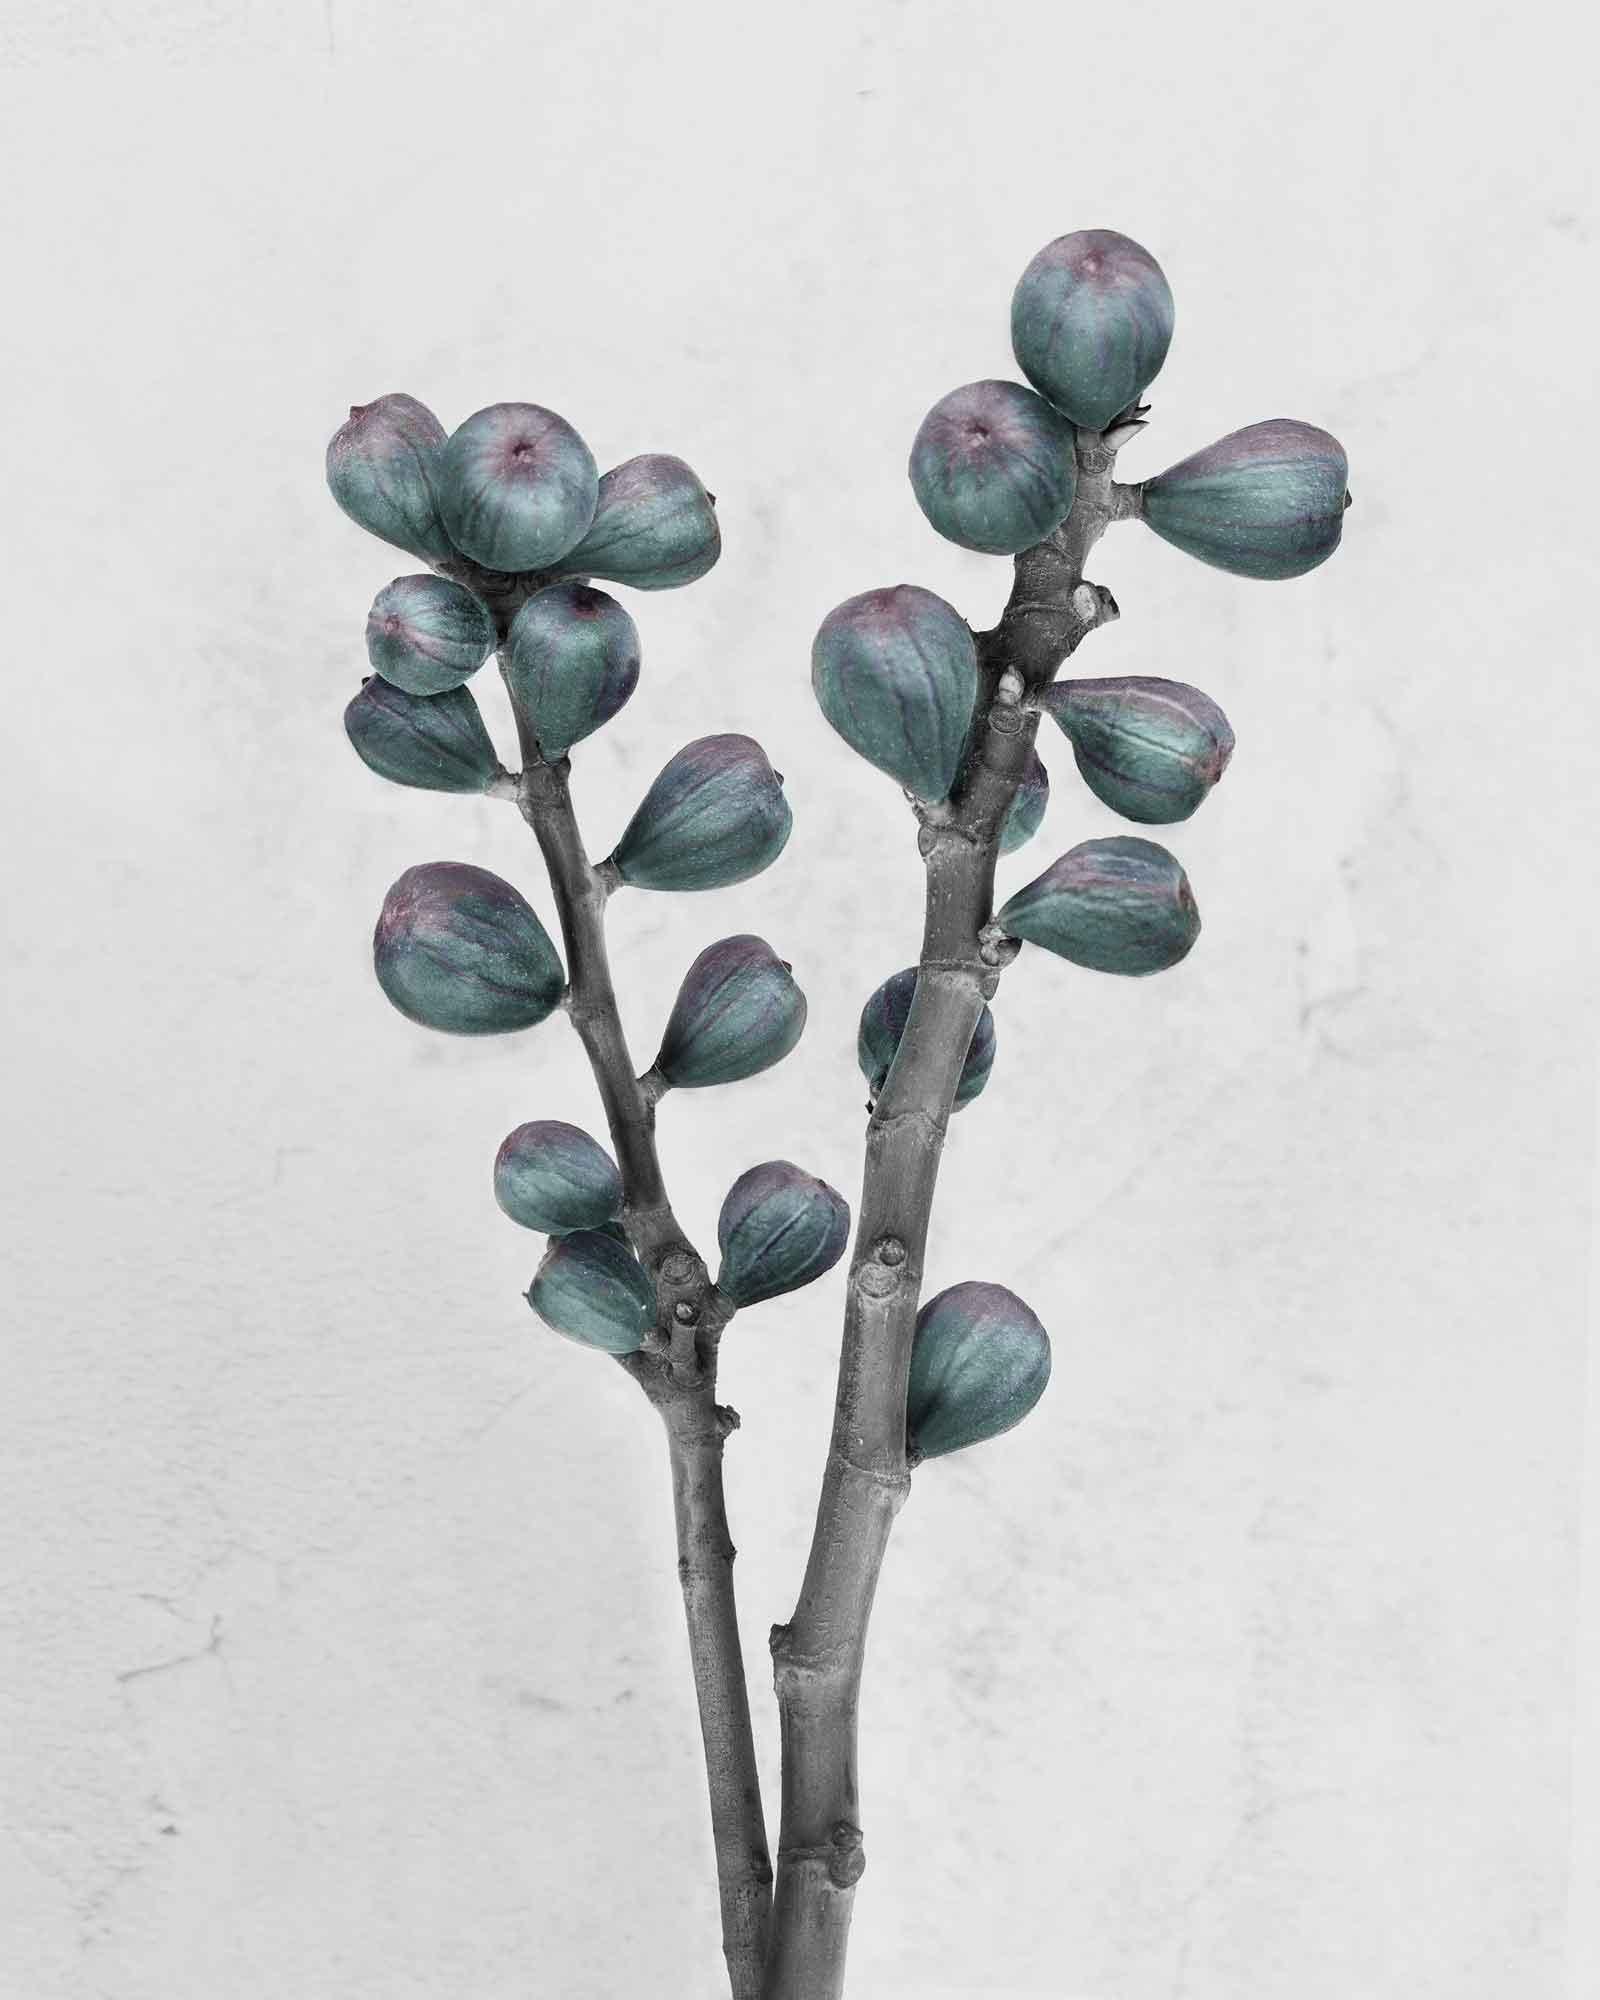 Vee Speers Still-Life Photograph - Botanica #27 (Ficus Carica)